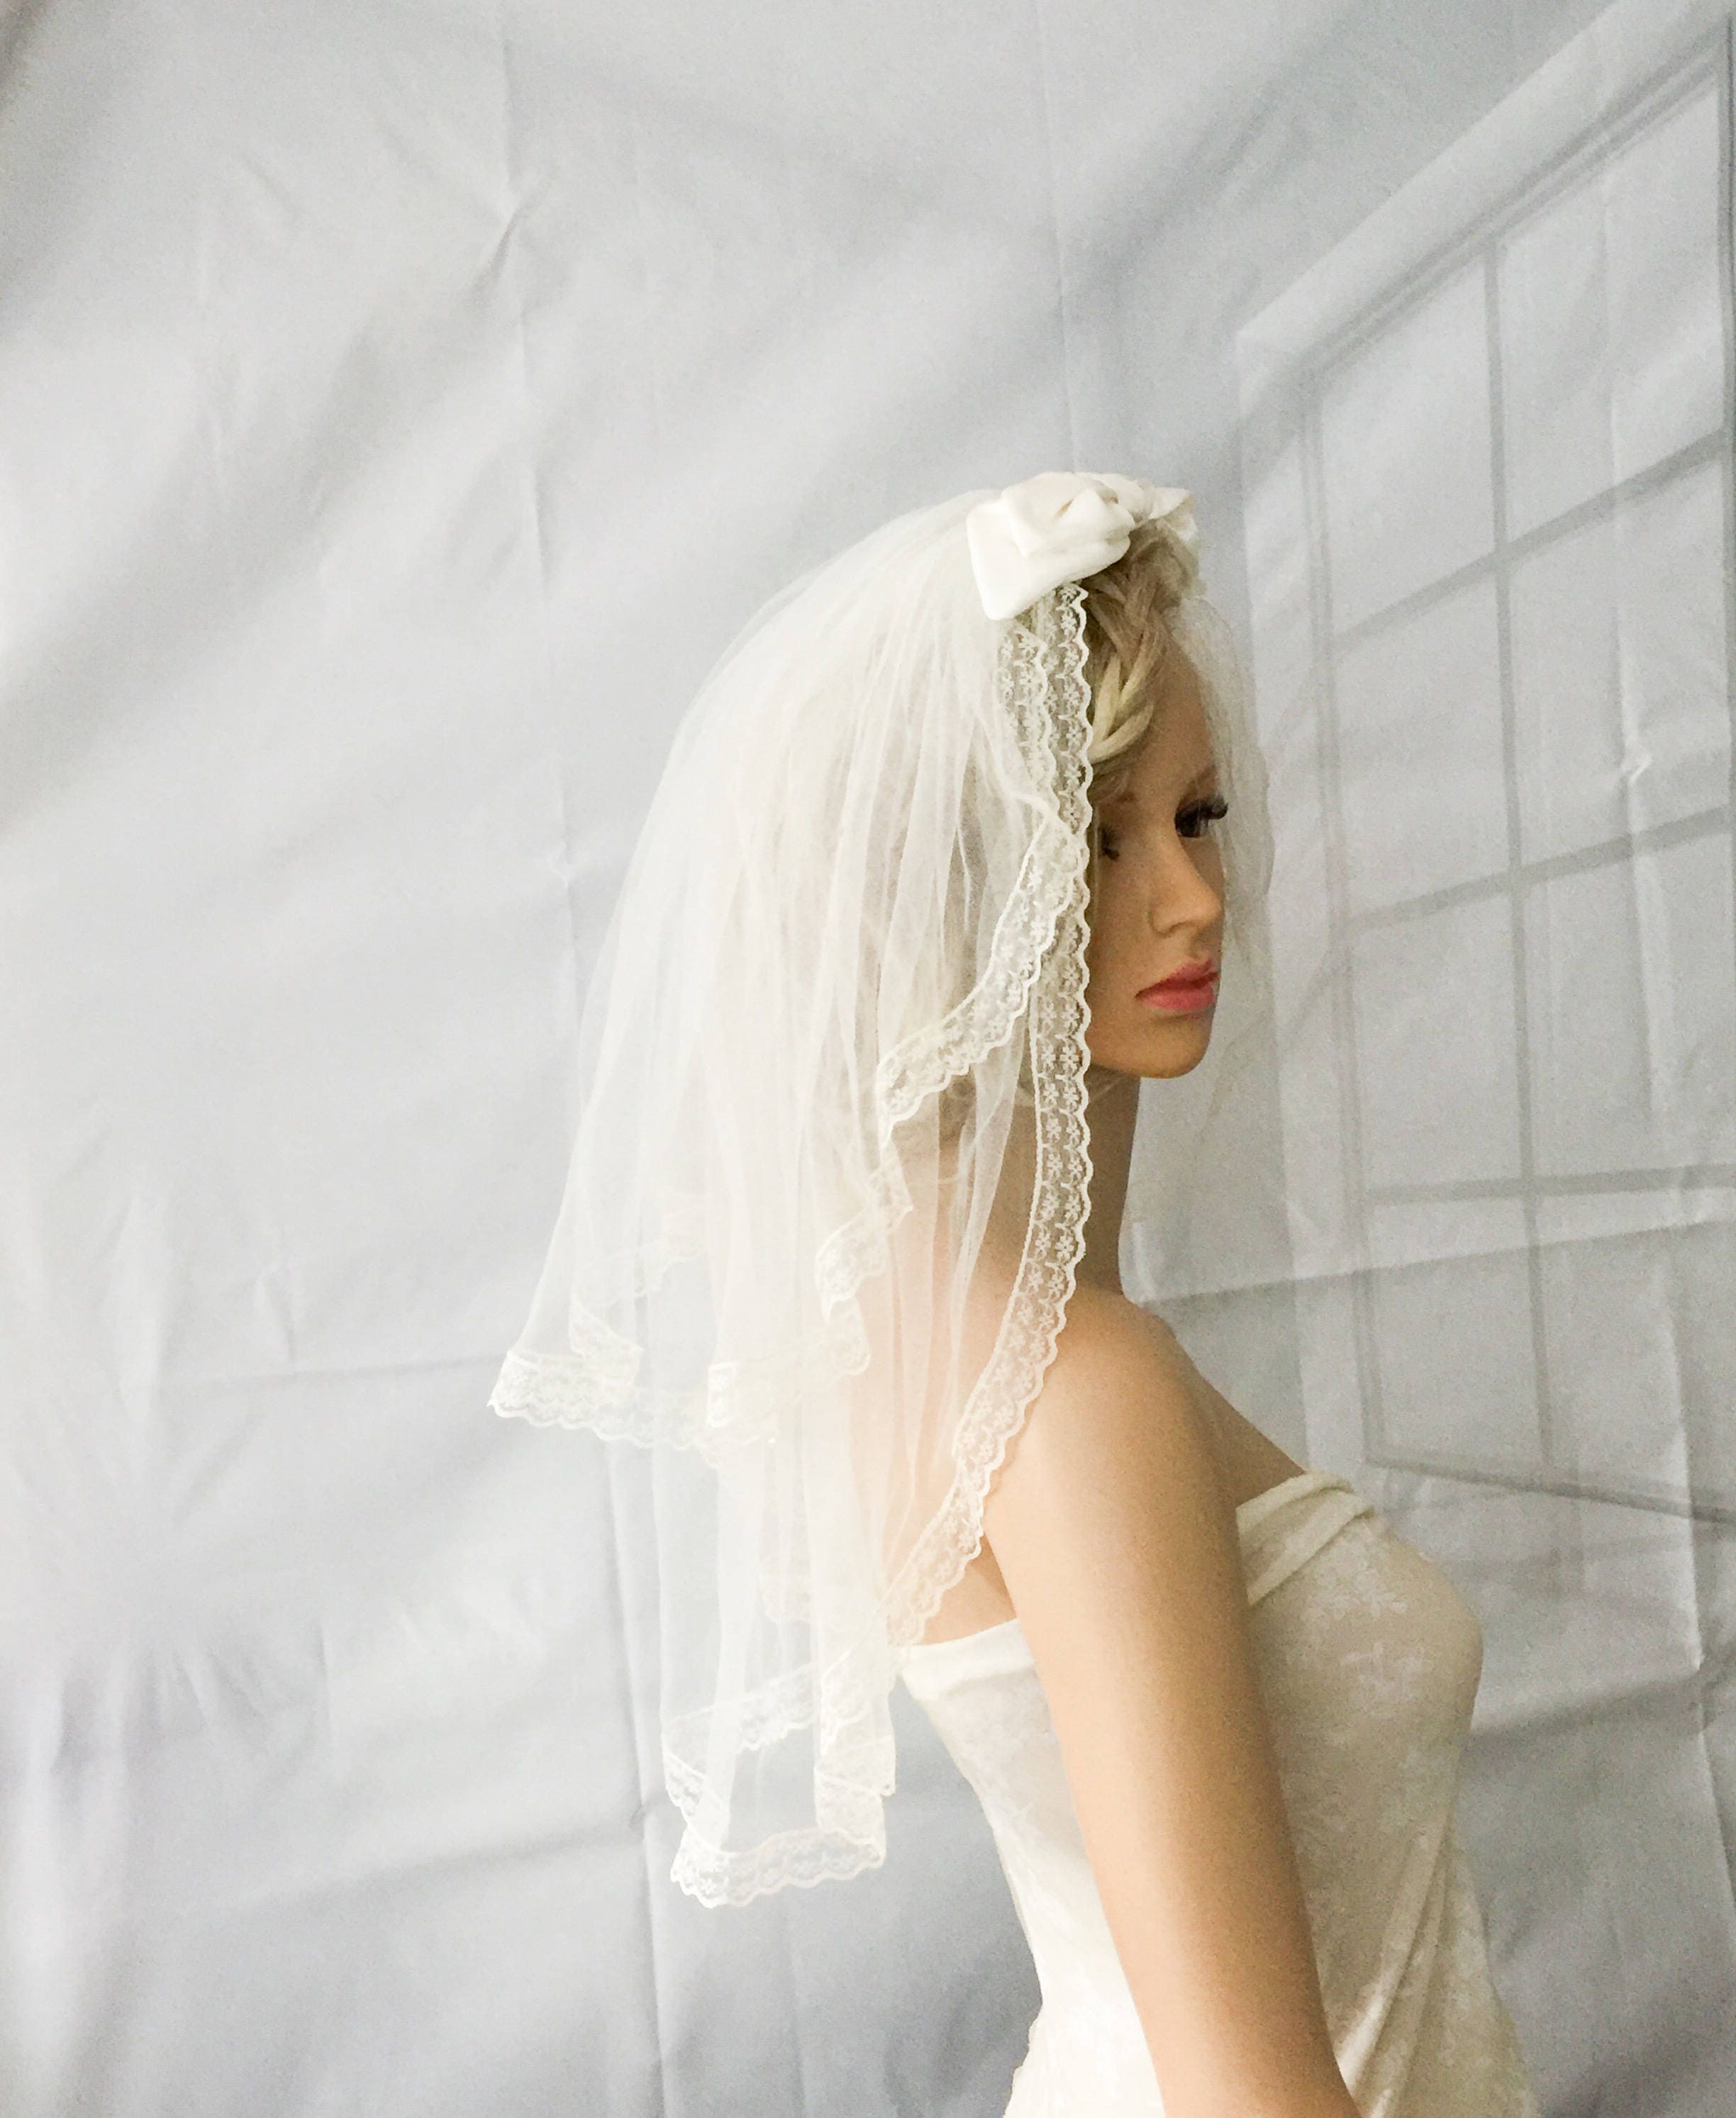 AnitaHiltonweddings Wedding Veil, Short Bridal Veil, Blush Veil, Vintage Style Veil, Elbow Length Veil, Bow Wedding Veil, Ivory Veil, Short Veil